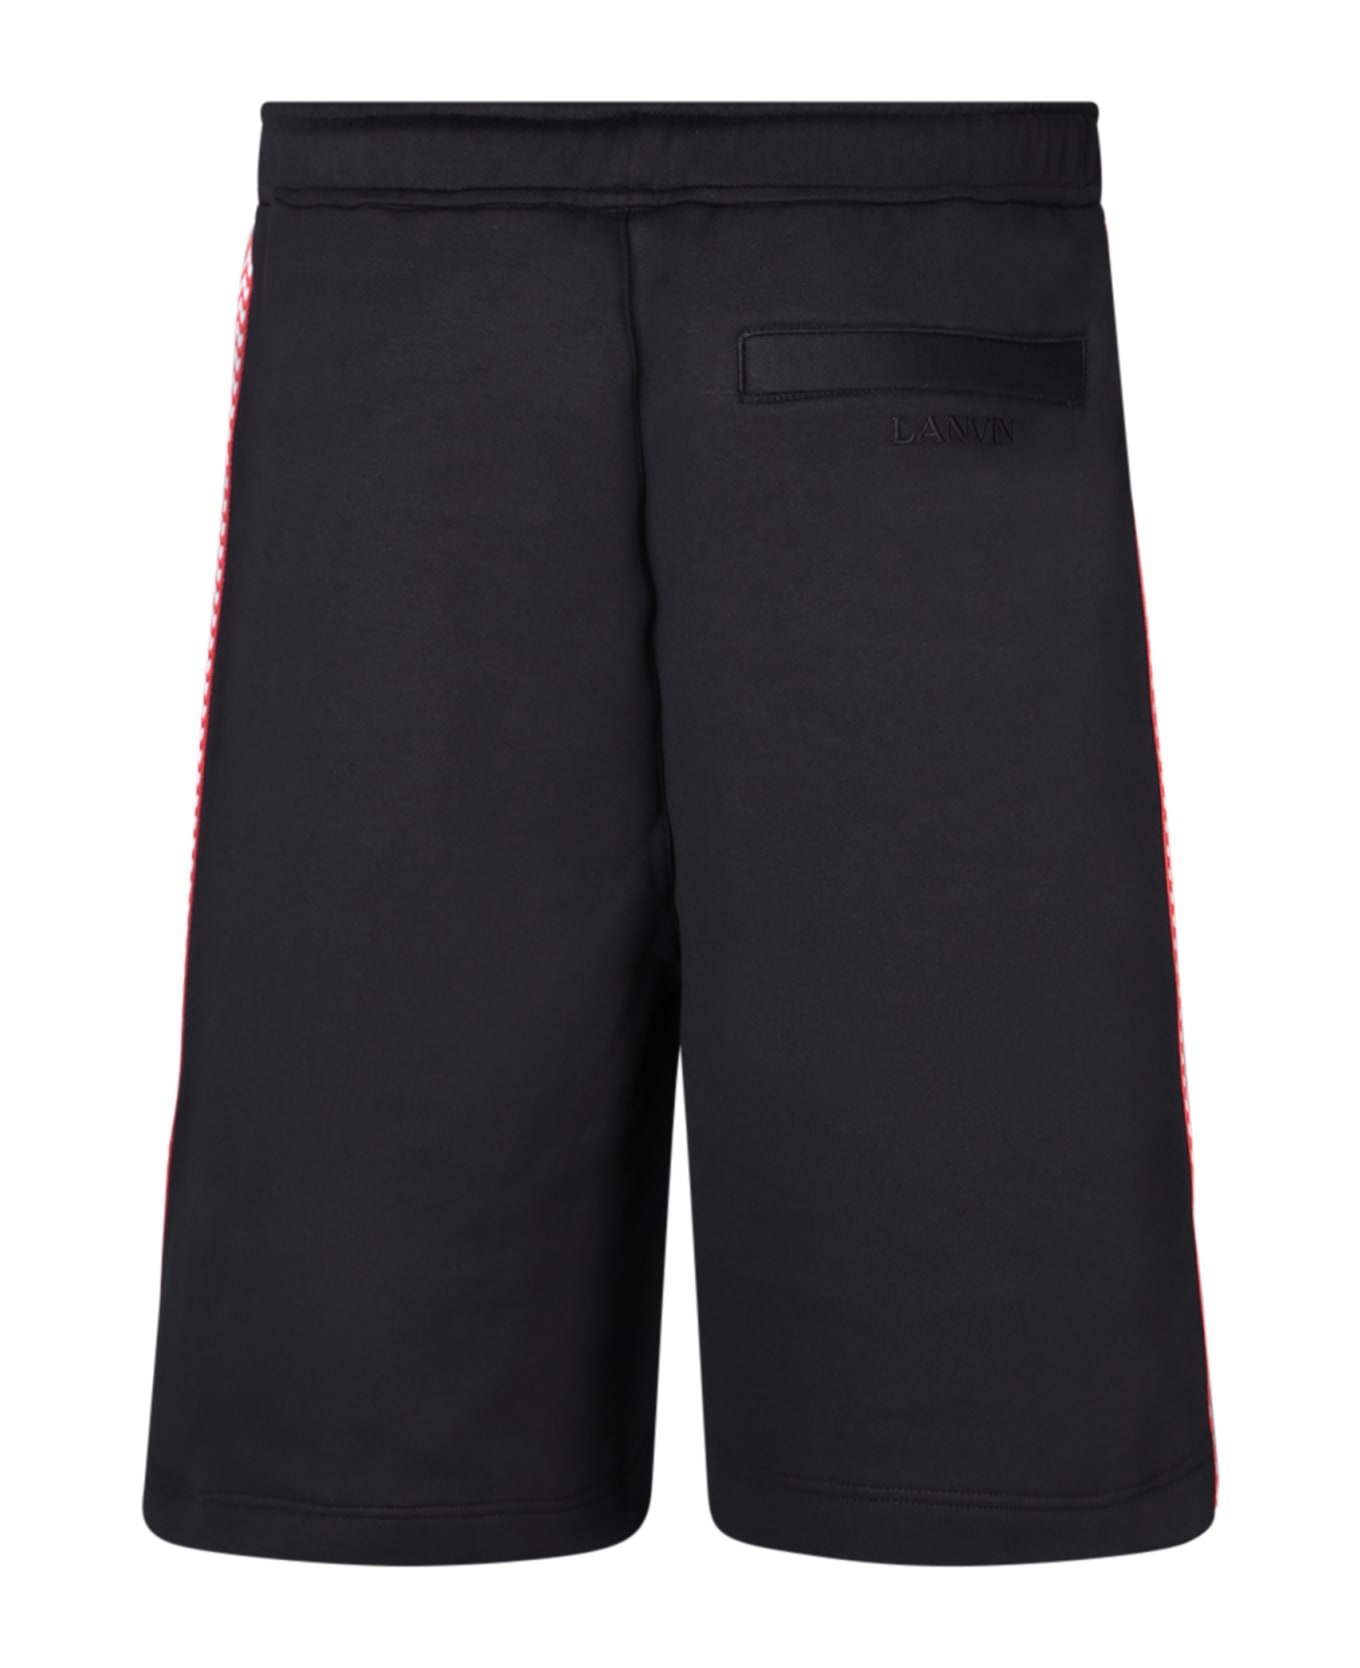 Lanvin Curb Black Bermuda Shorts - Black